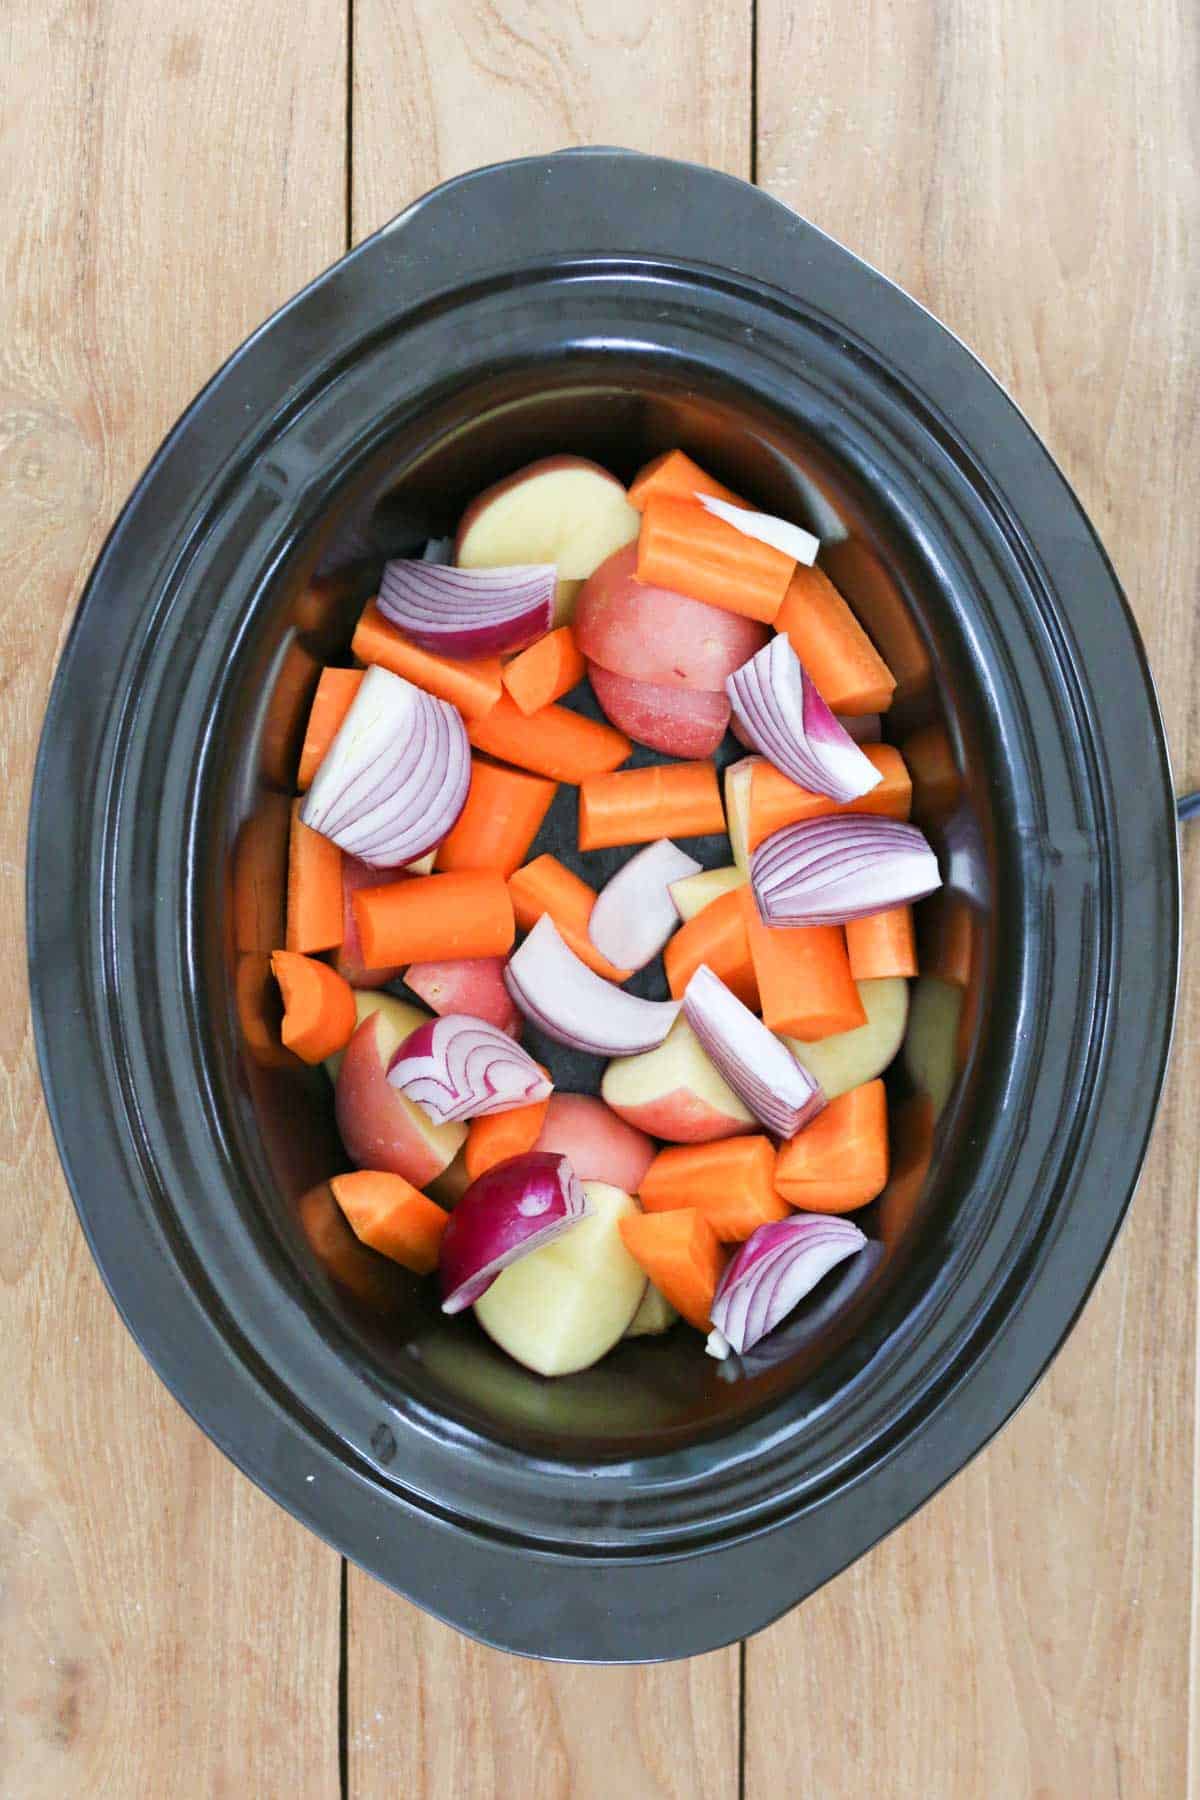 Uncooked vegetables in a crock pot.